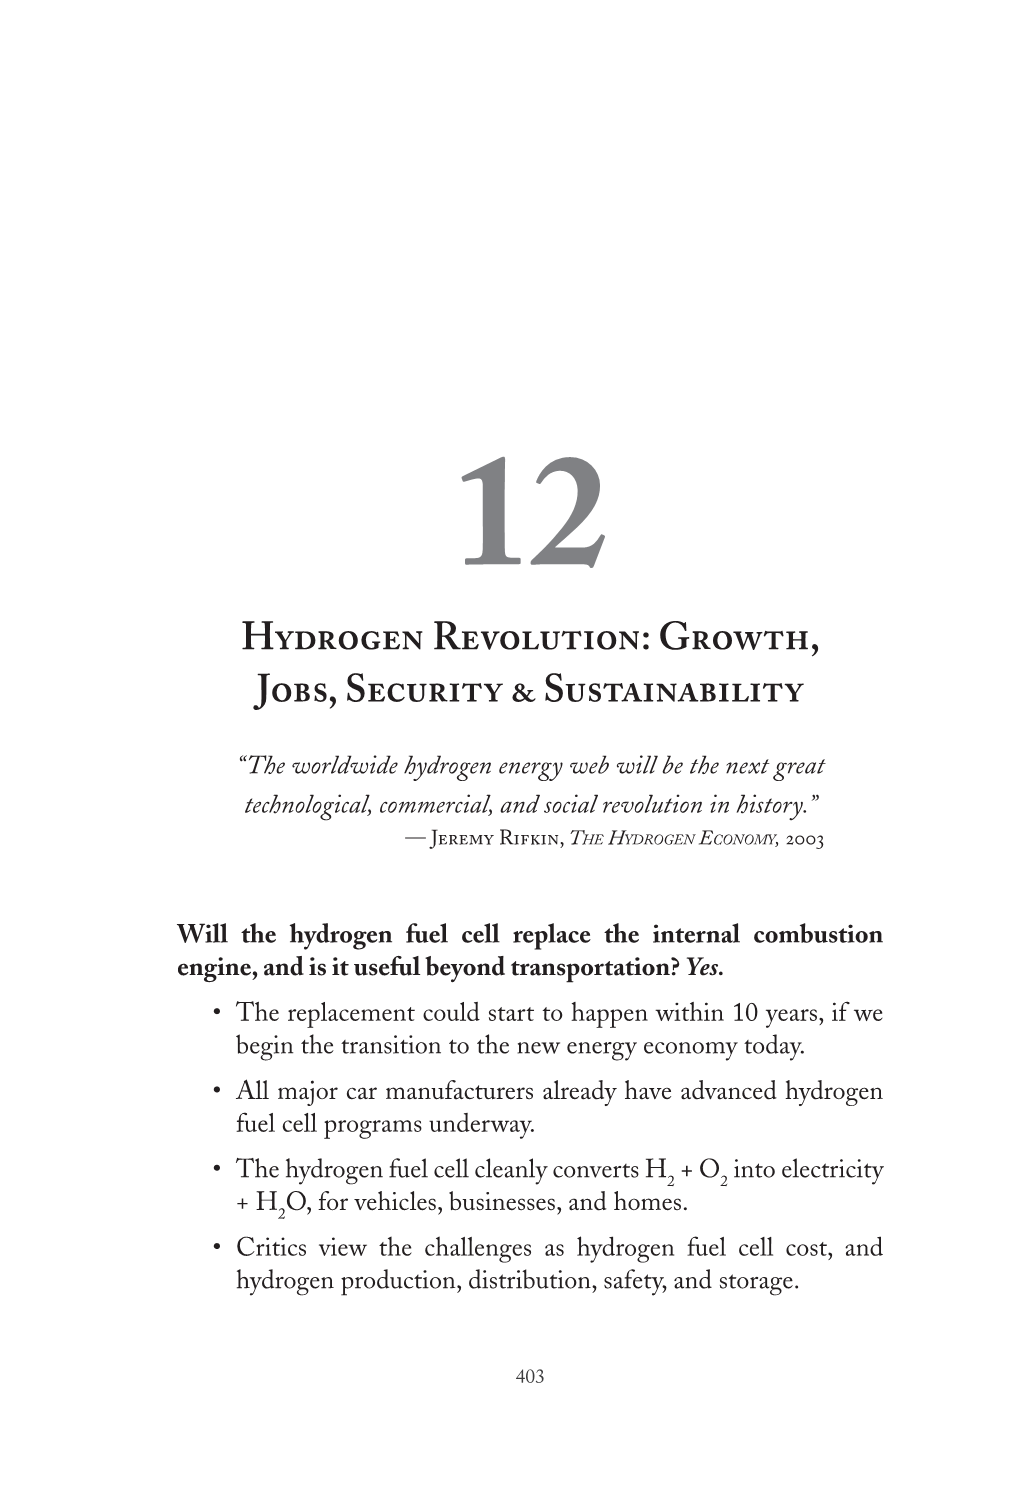 Hydrogen Revolution: Growth, Jobs, Security & Sustainability